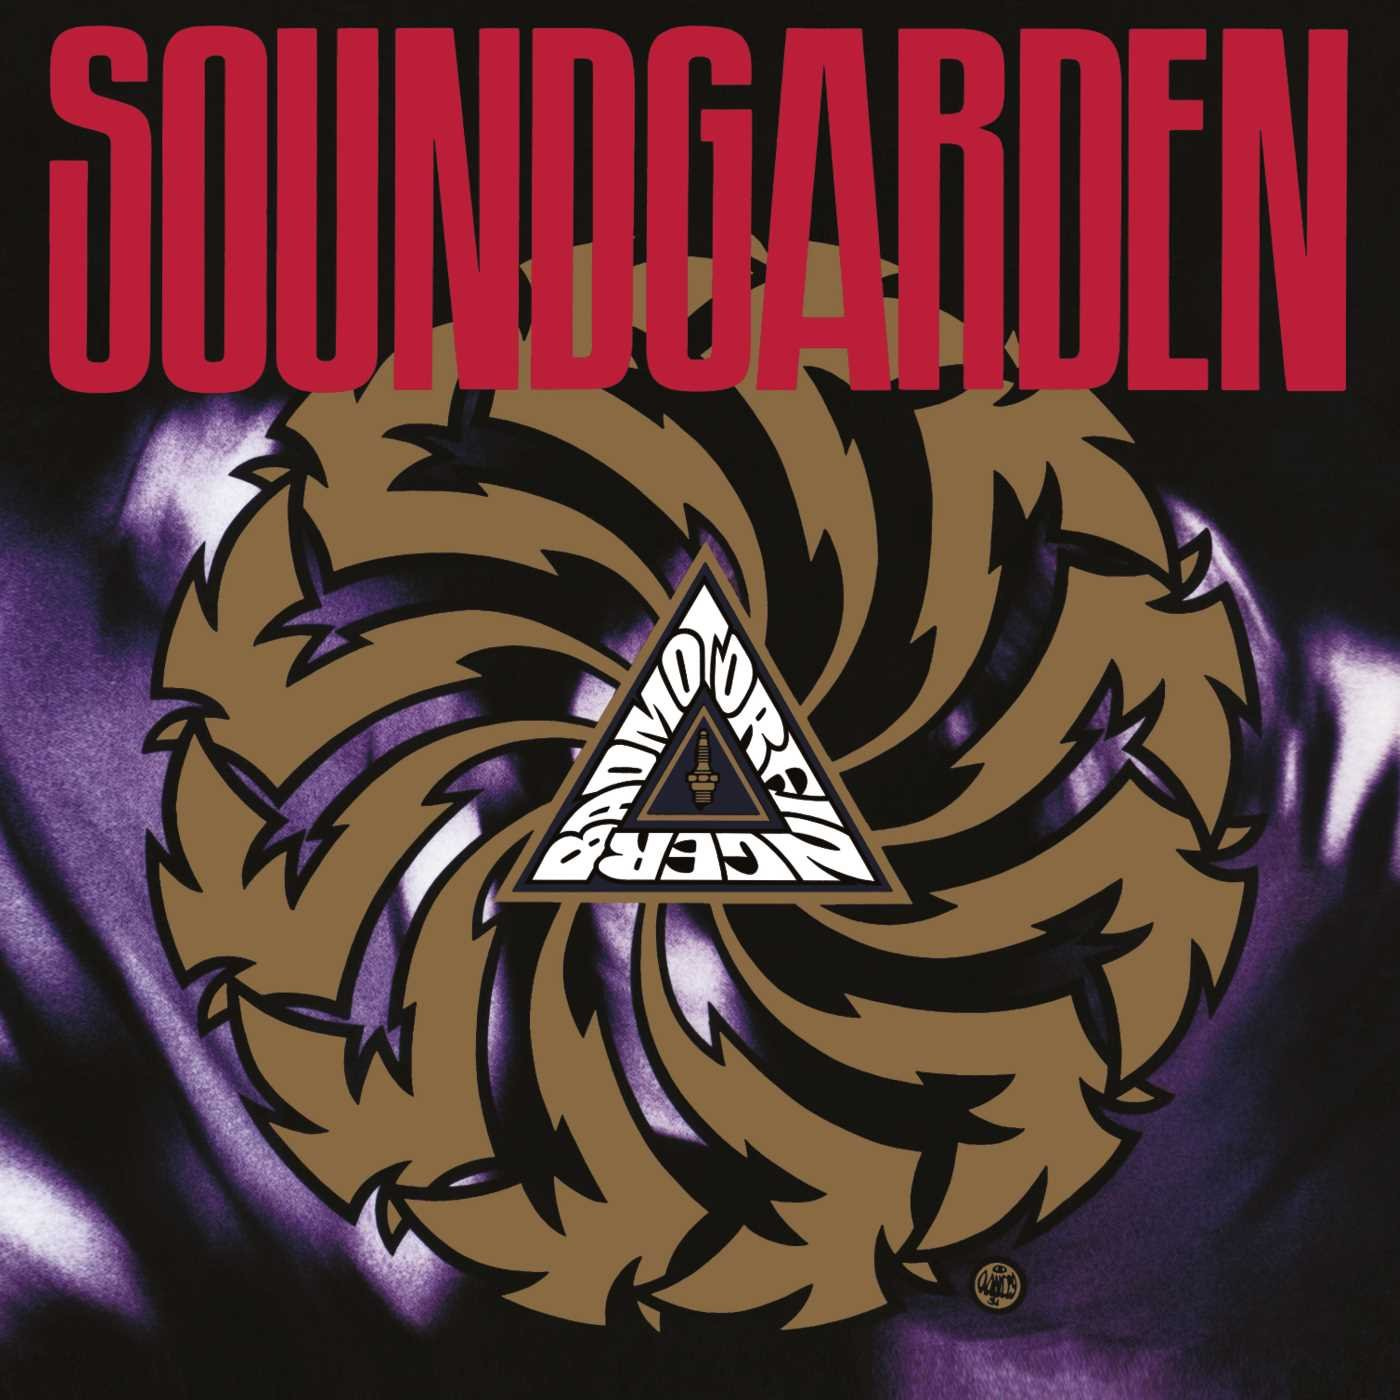 Soundgarden - Soundgarden - Badmotorfinger - Amazon.com Music